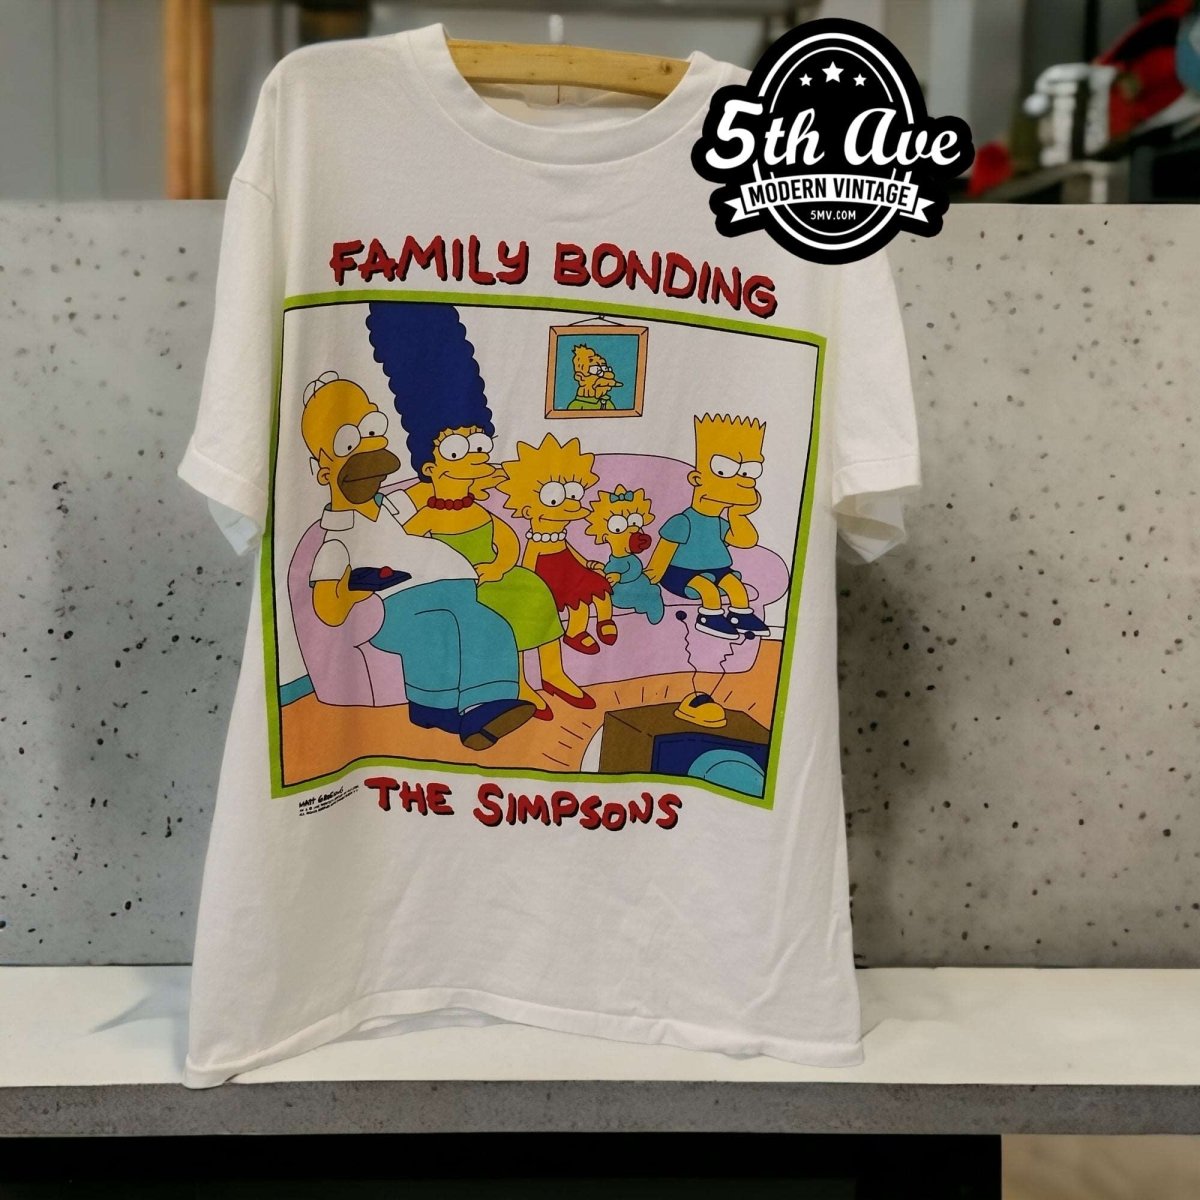 The Simpsons Family Bonding t shirt - Vintage Band Shirts